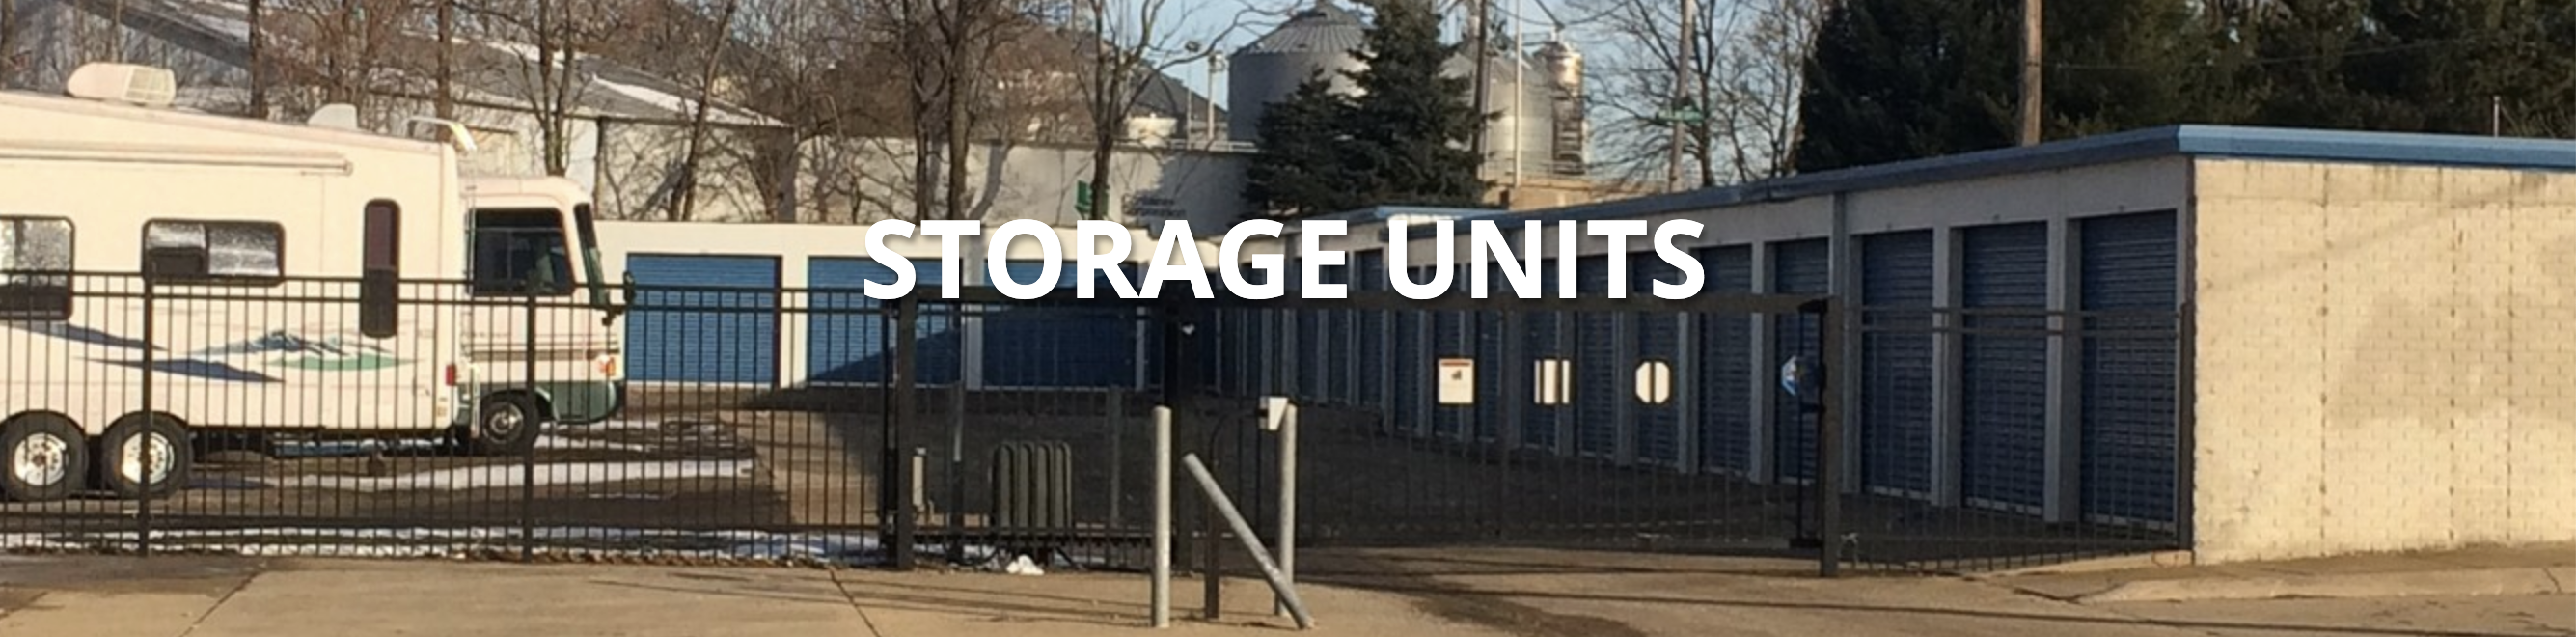 Storage Units in Bloomington, IL 